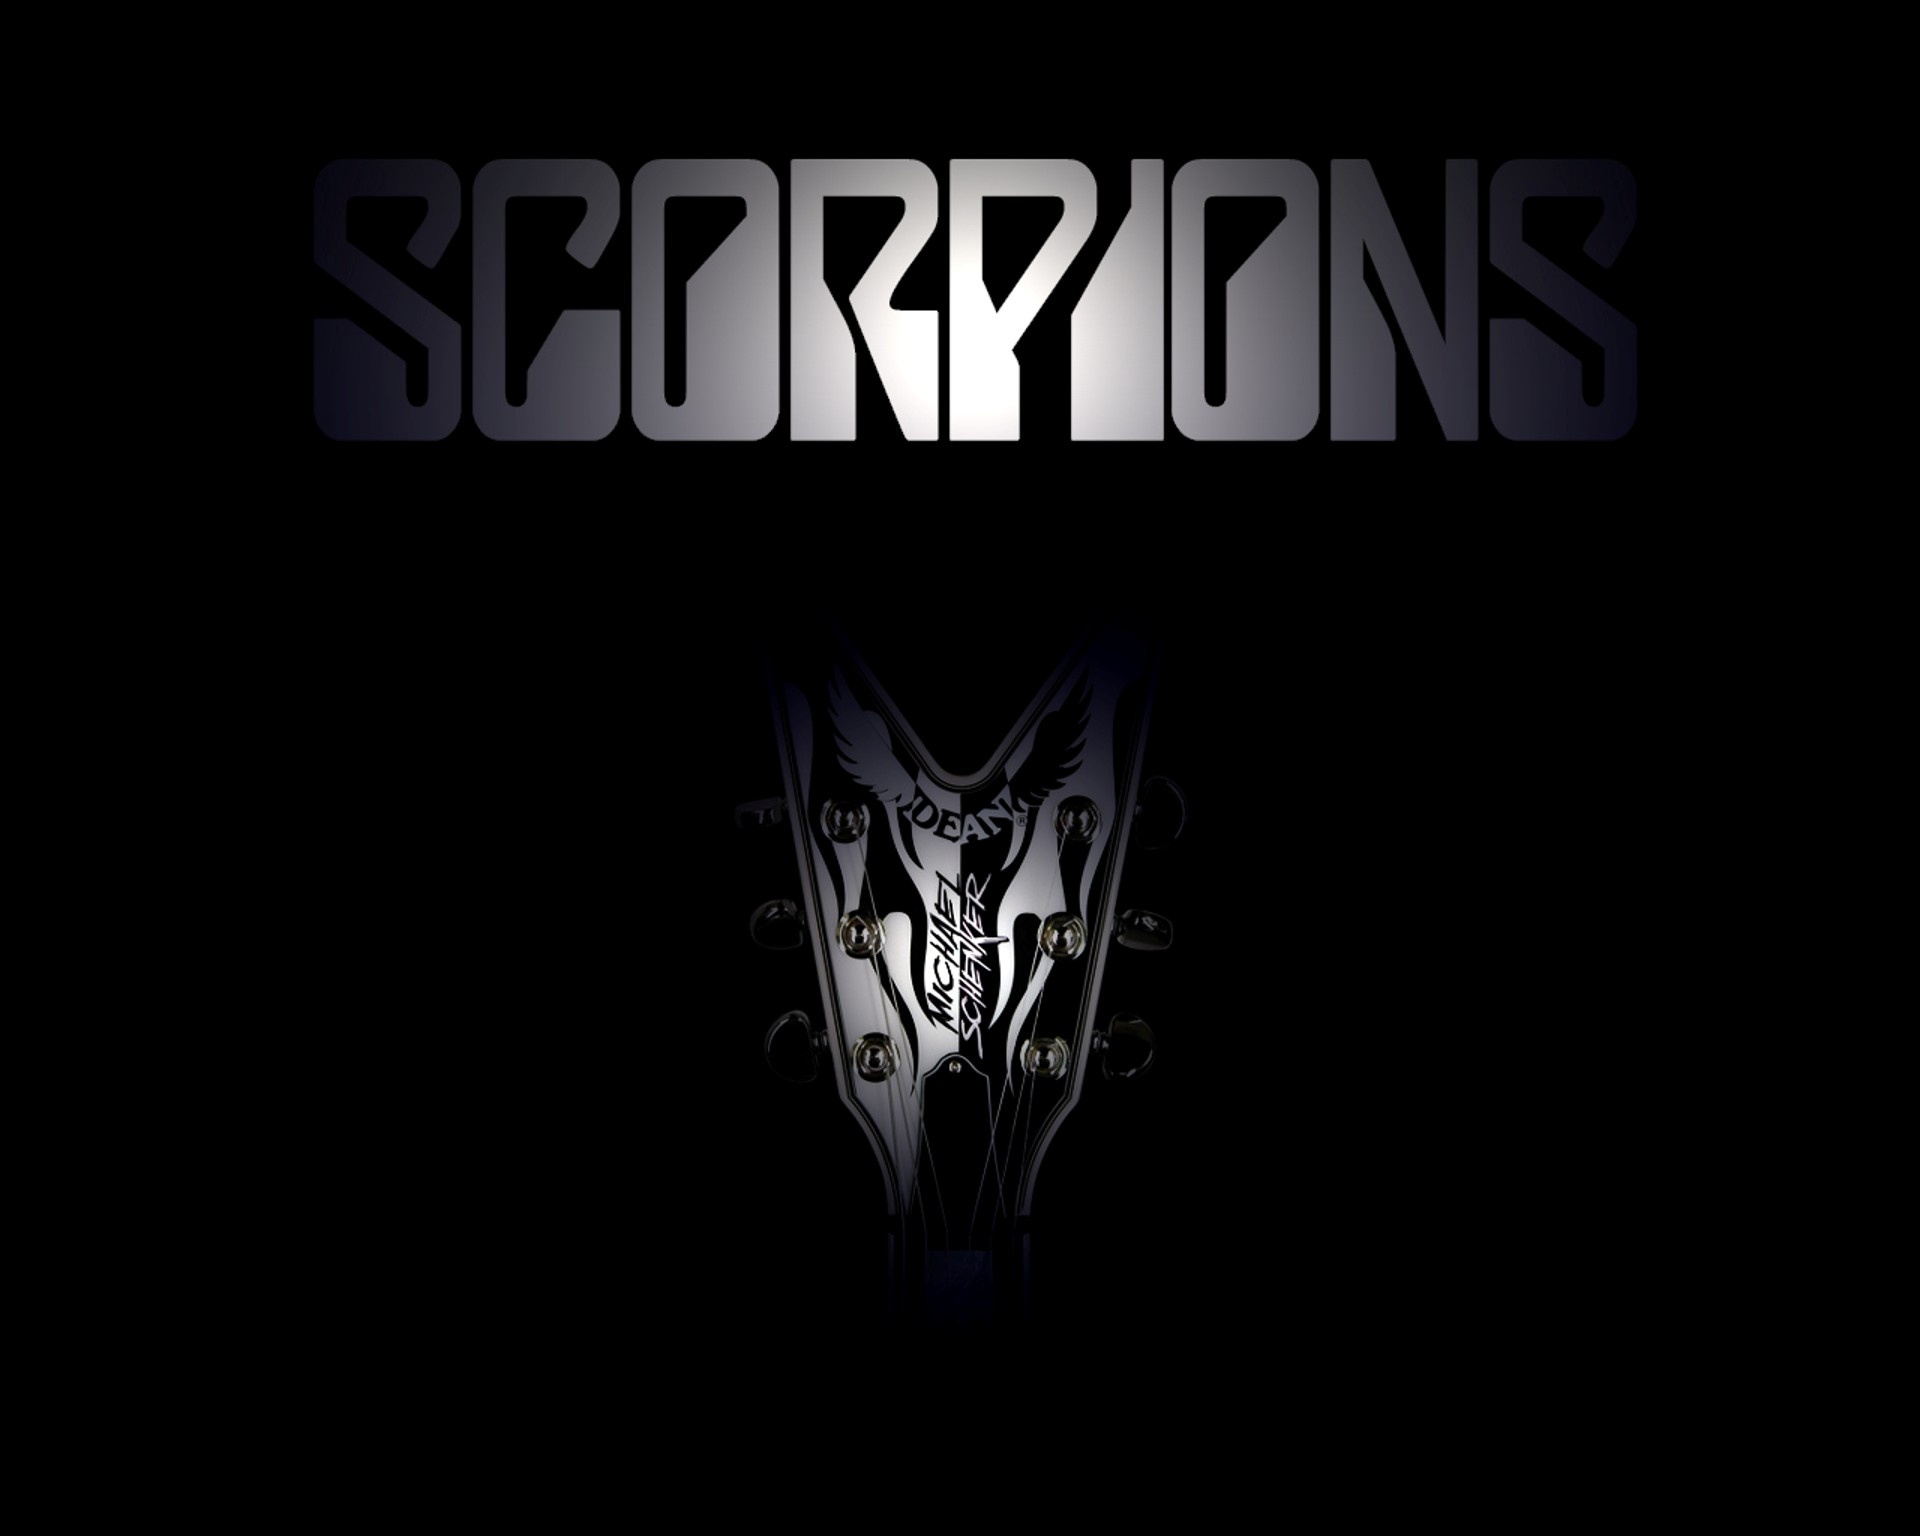 Scorpions Wallpaper X